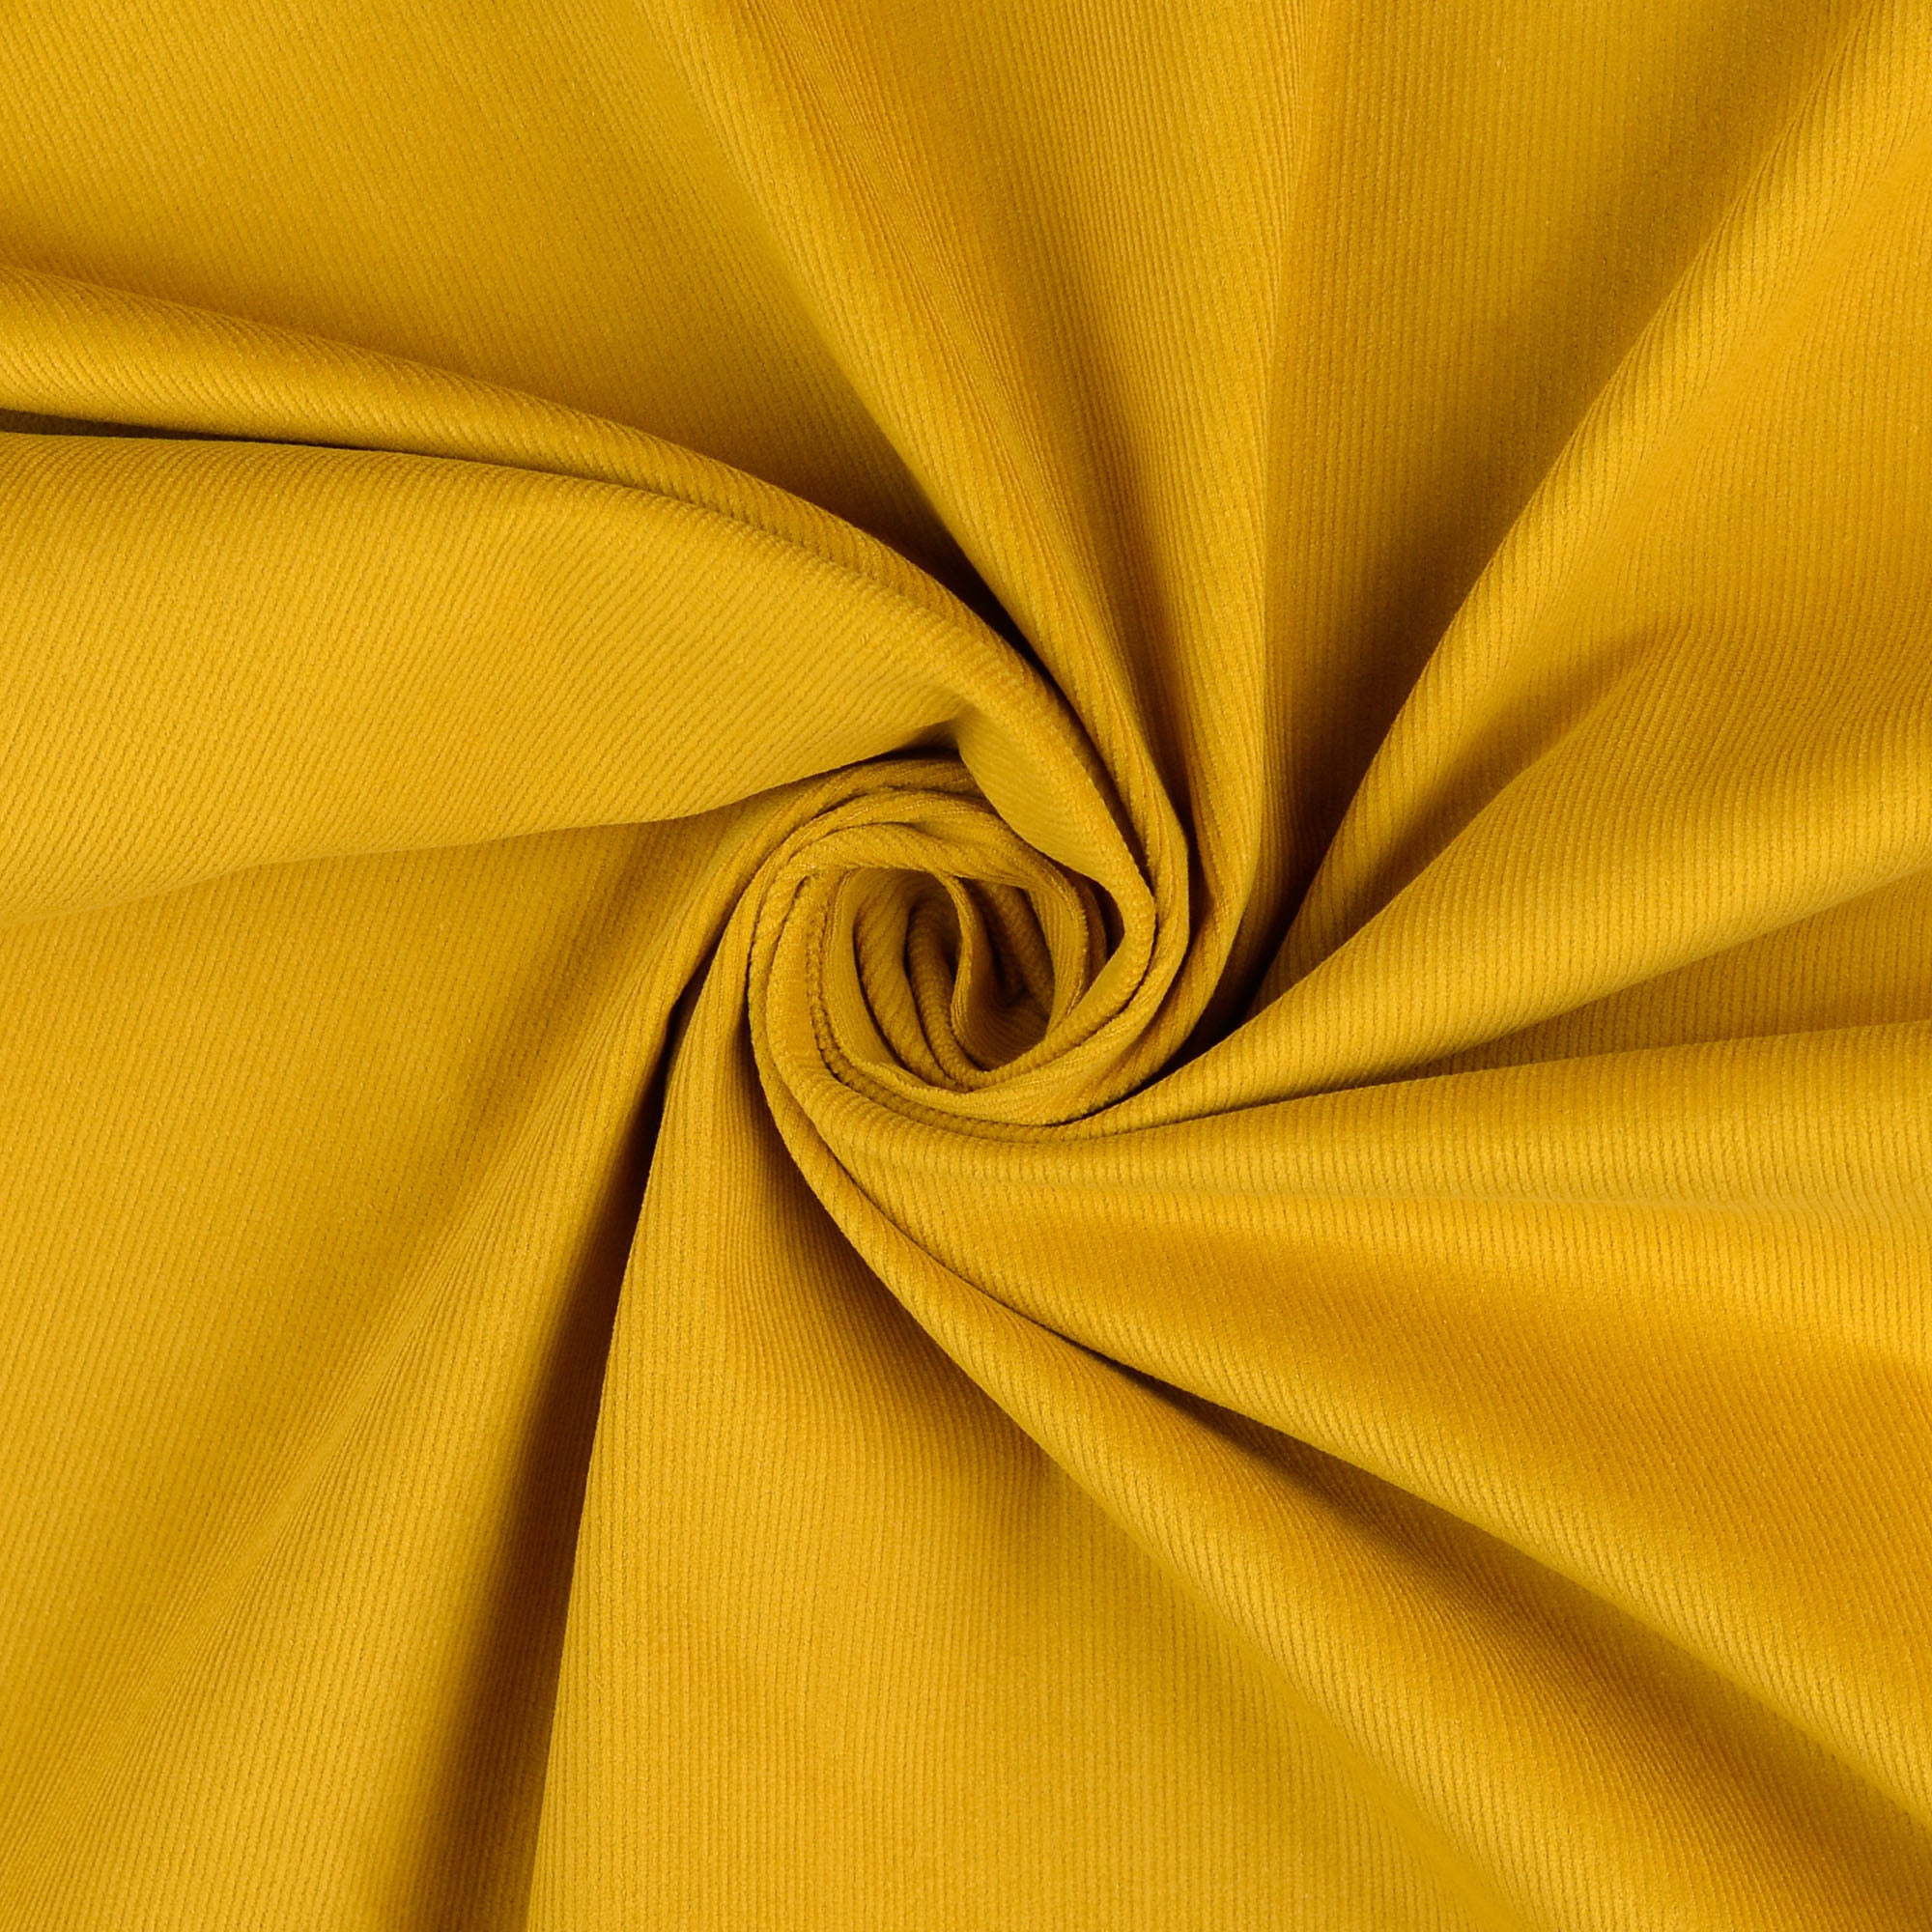 Stretch Cotton Needlecord in Mustard Yellow